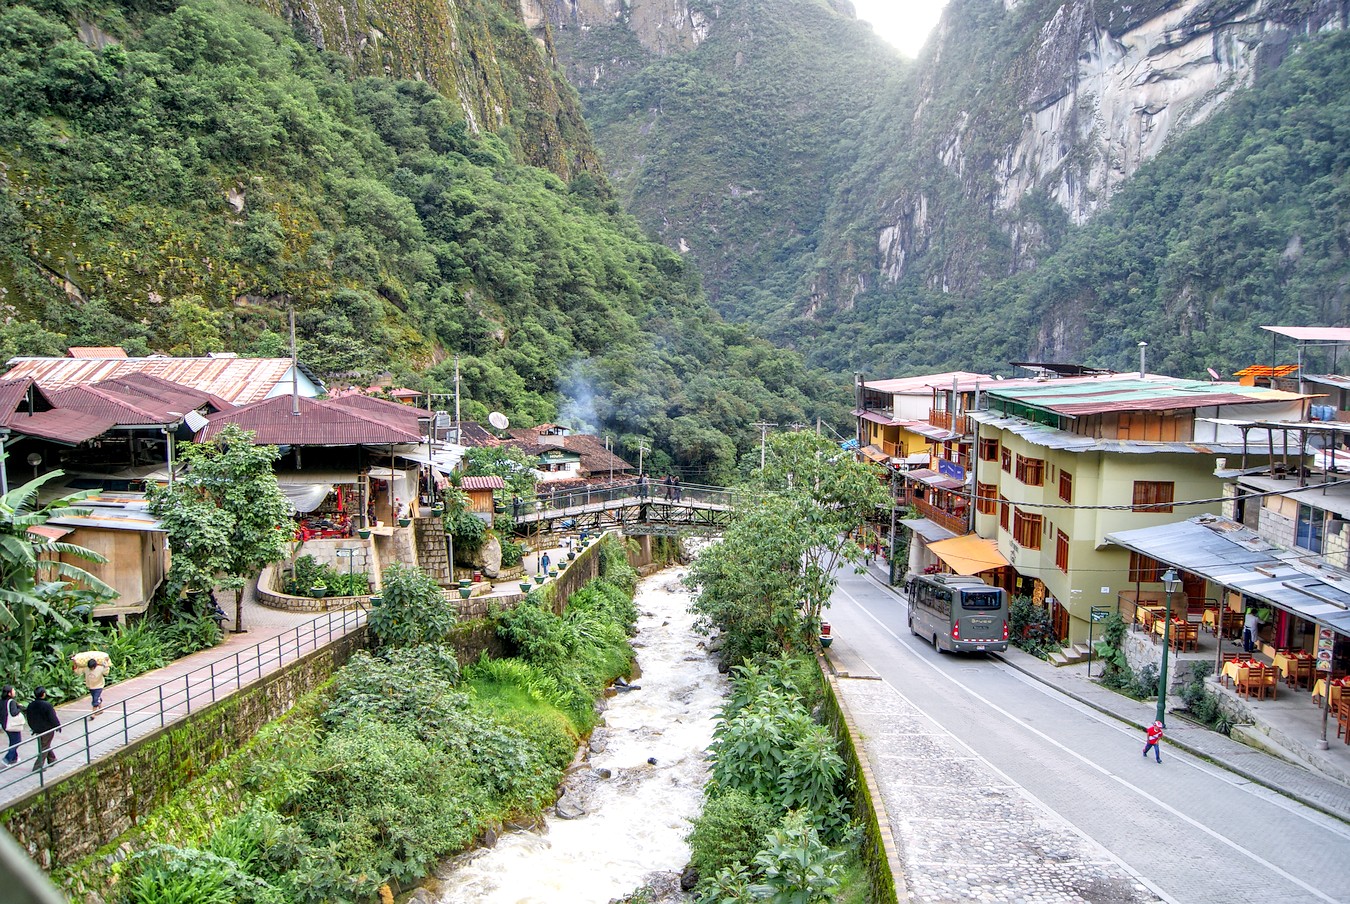 Getting to Machu Picchu – How to get to Machu Picchu